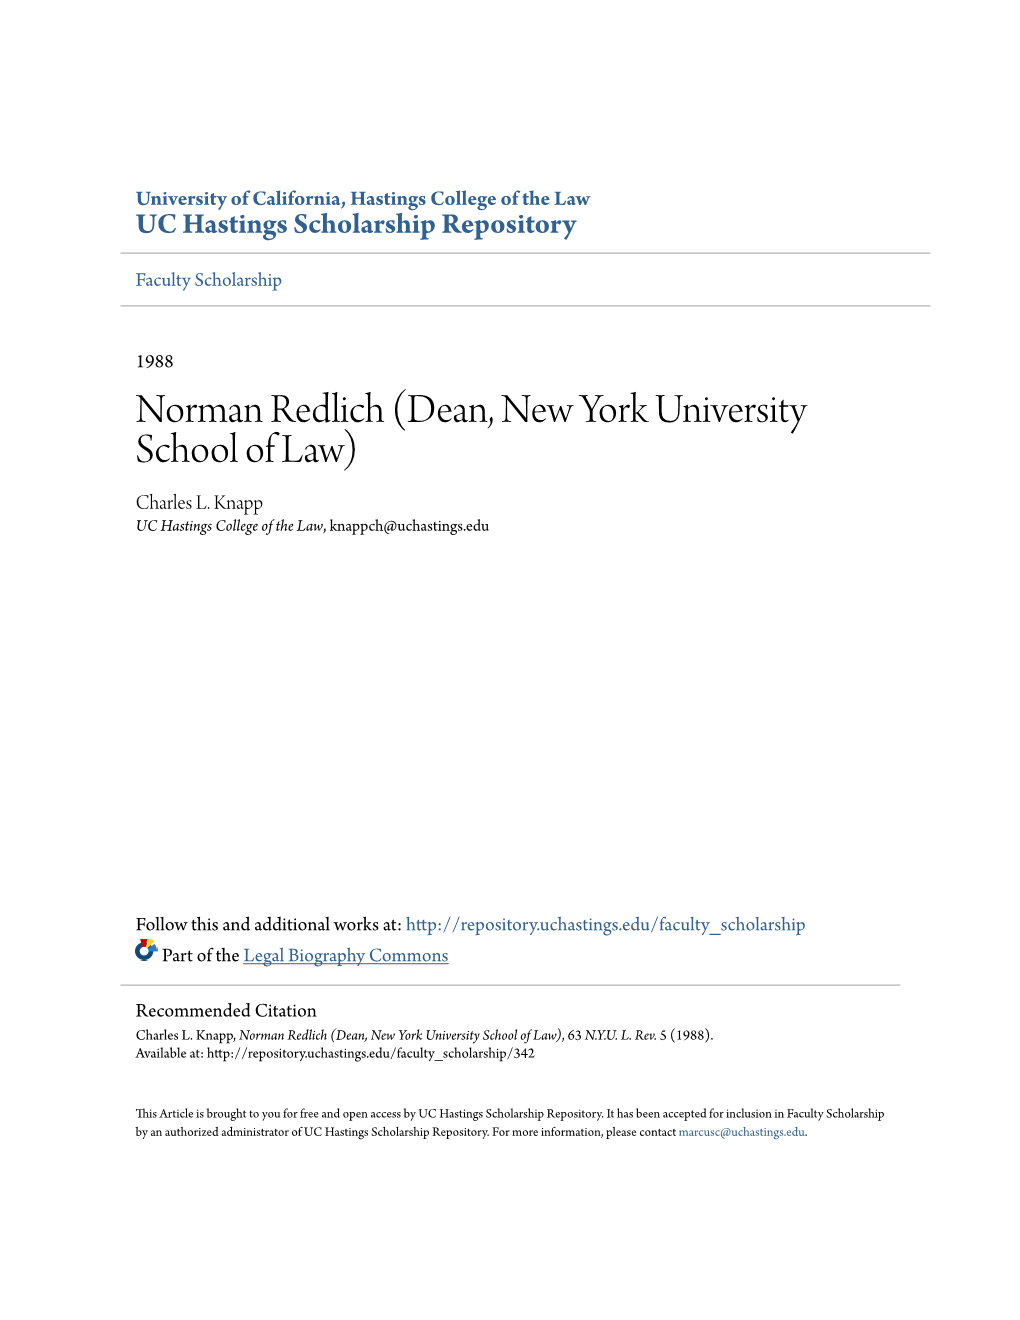 Norman Redlich (Dean, New York University School of Law) Charles L